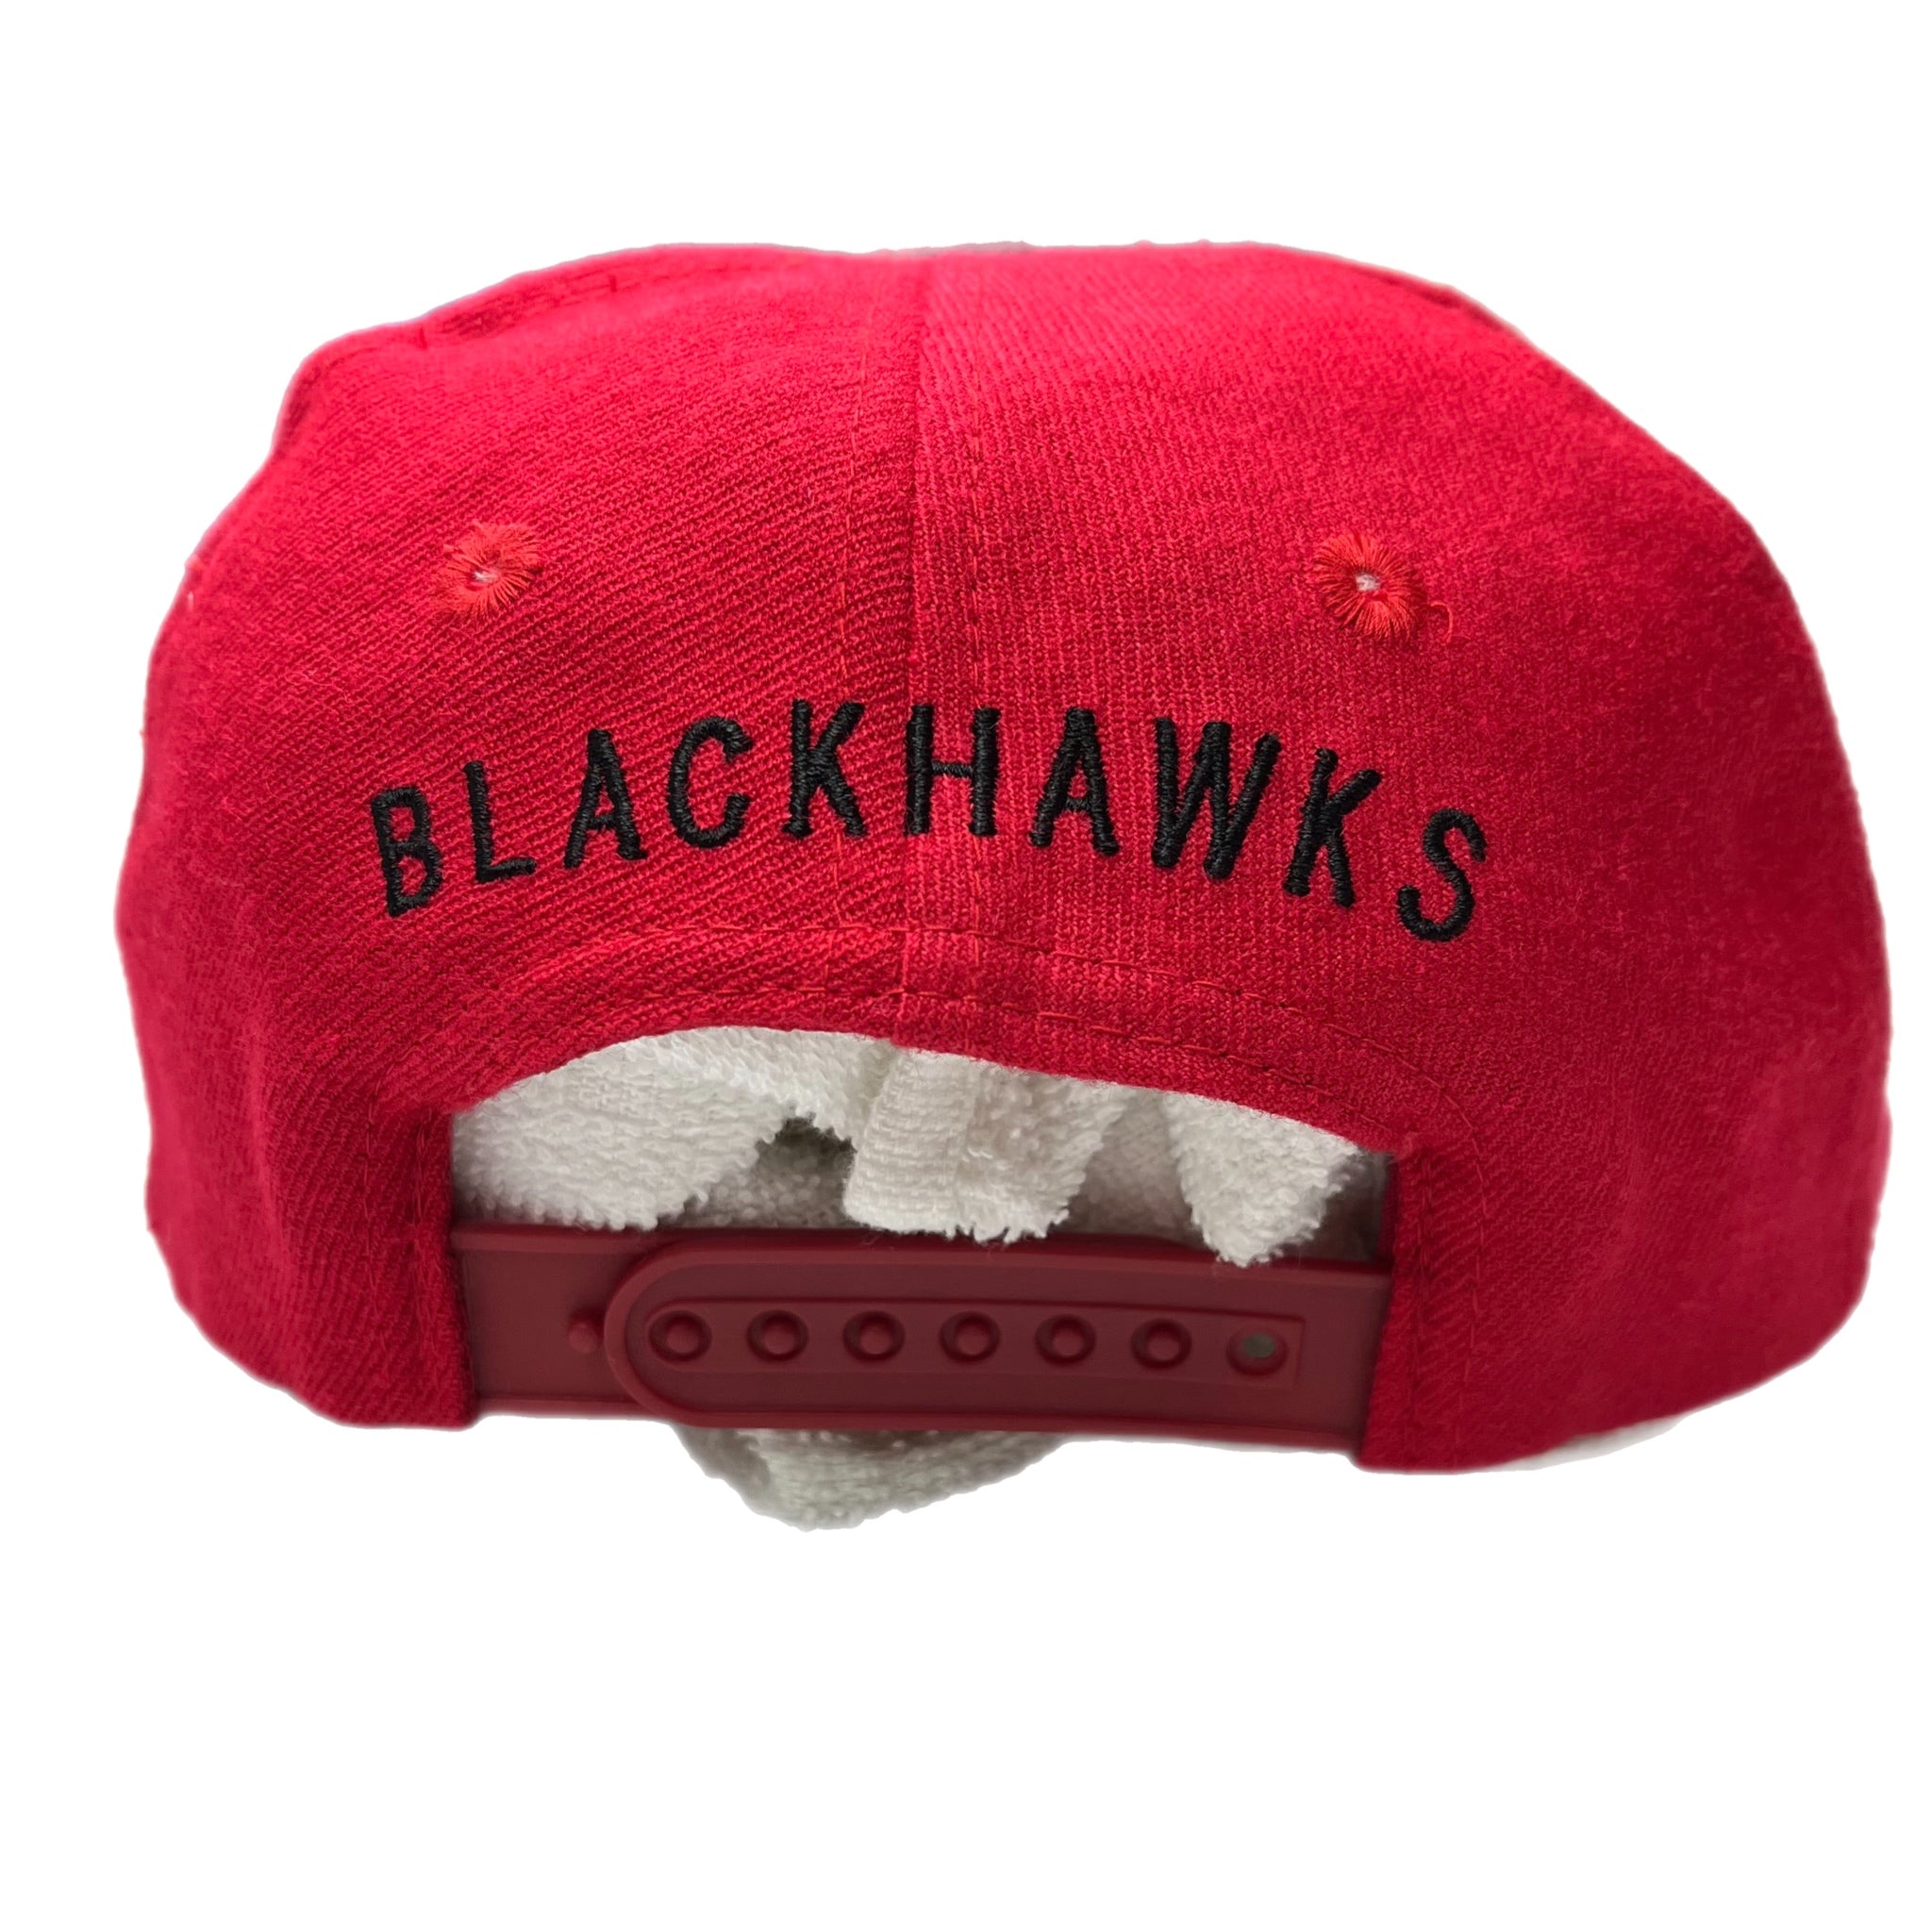 Vintage Chicago Blackhawks NHL Hat